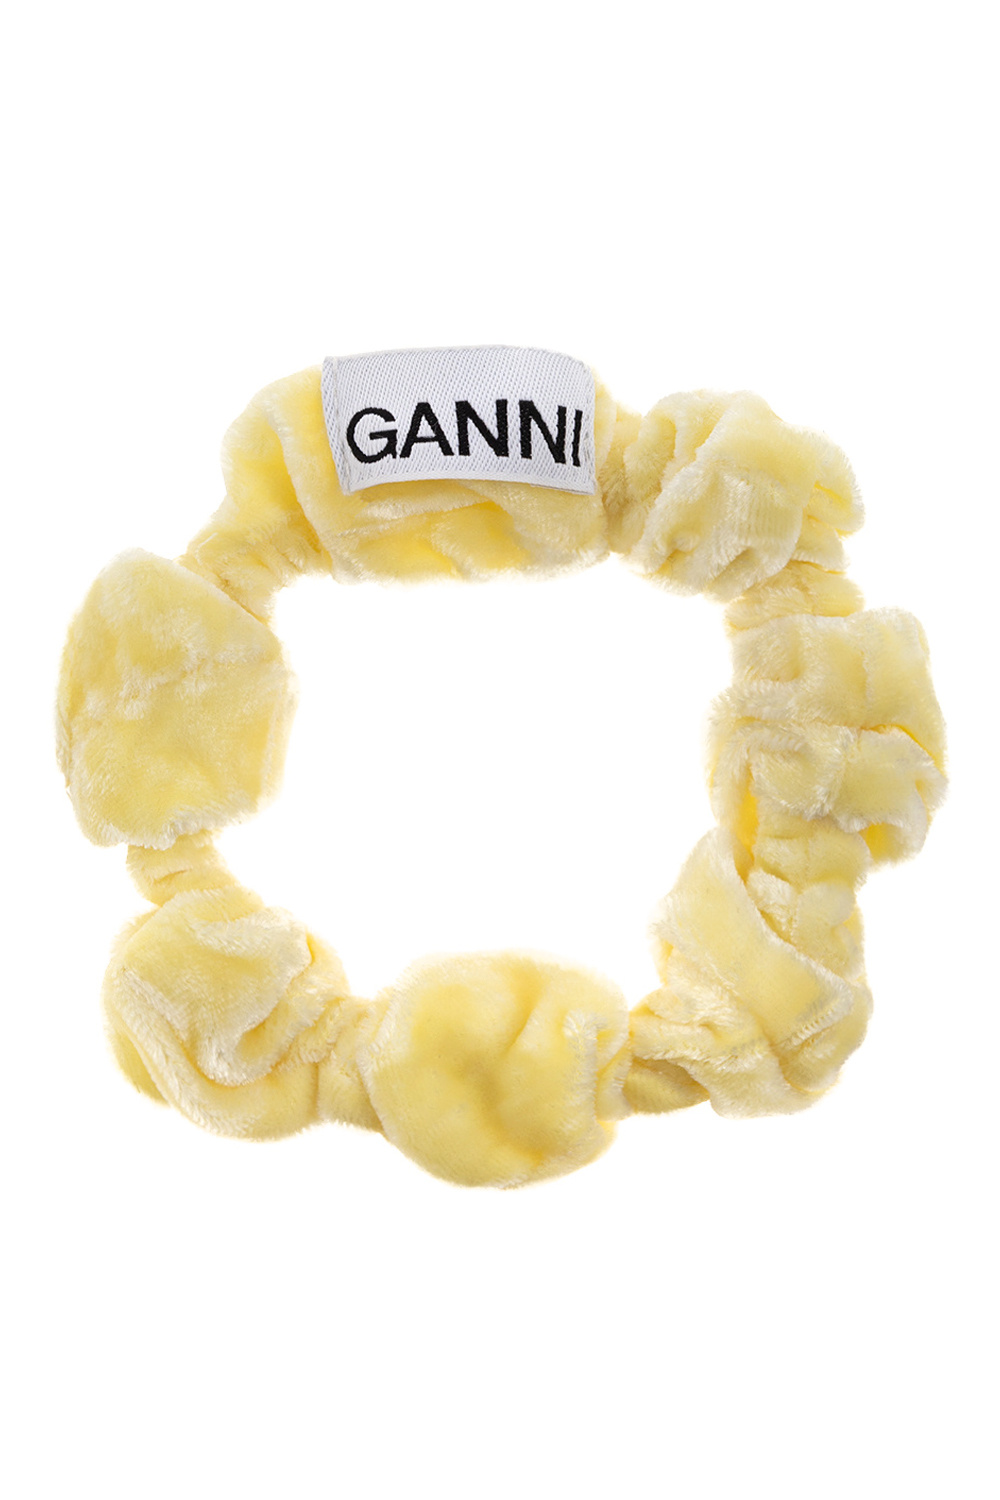 Ganni Patched scrunchie